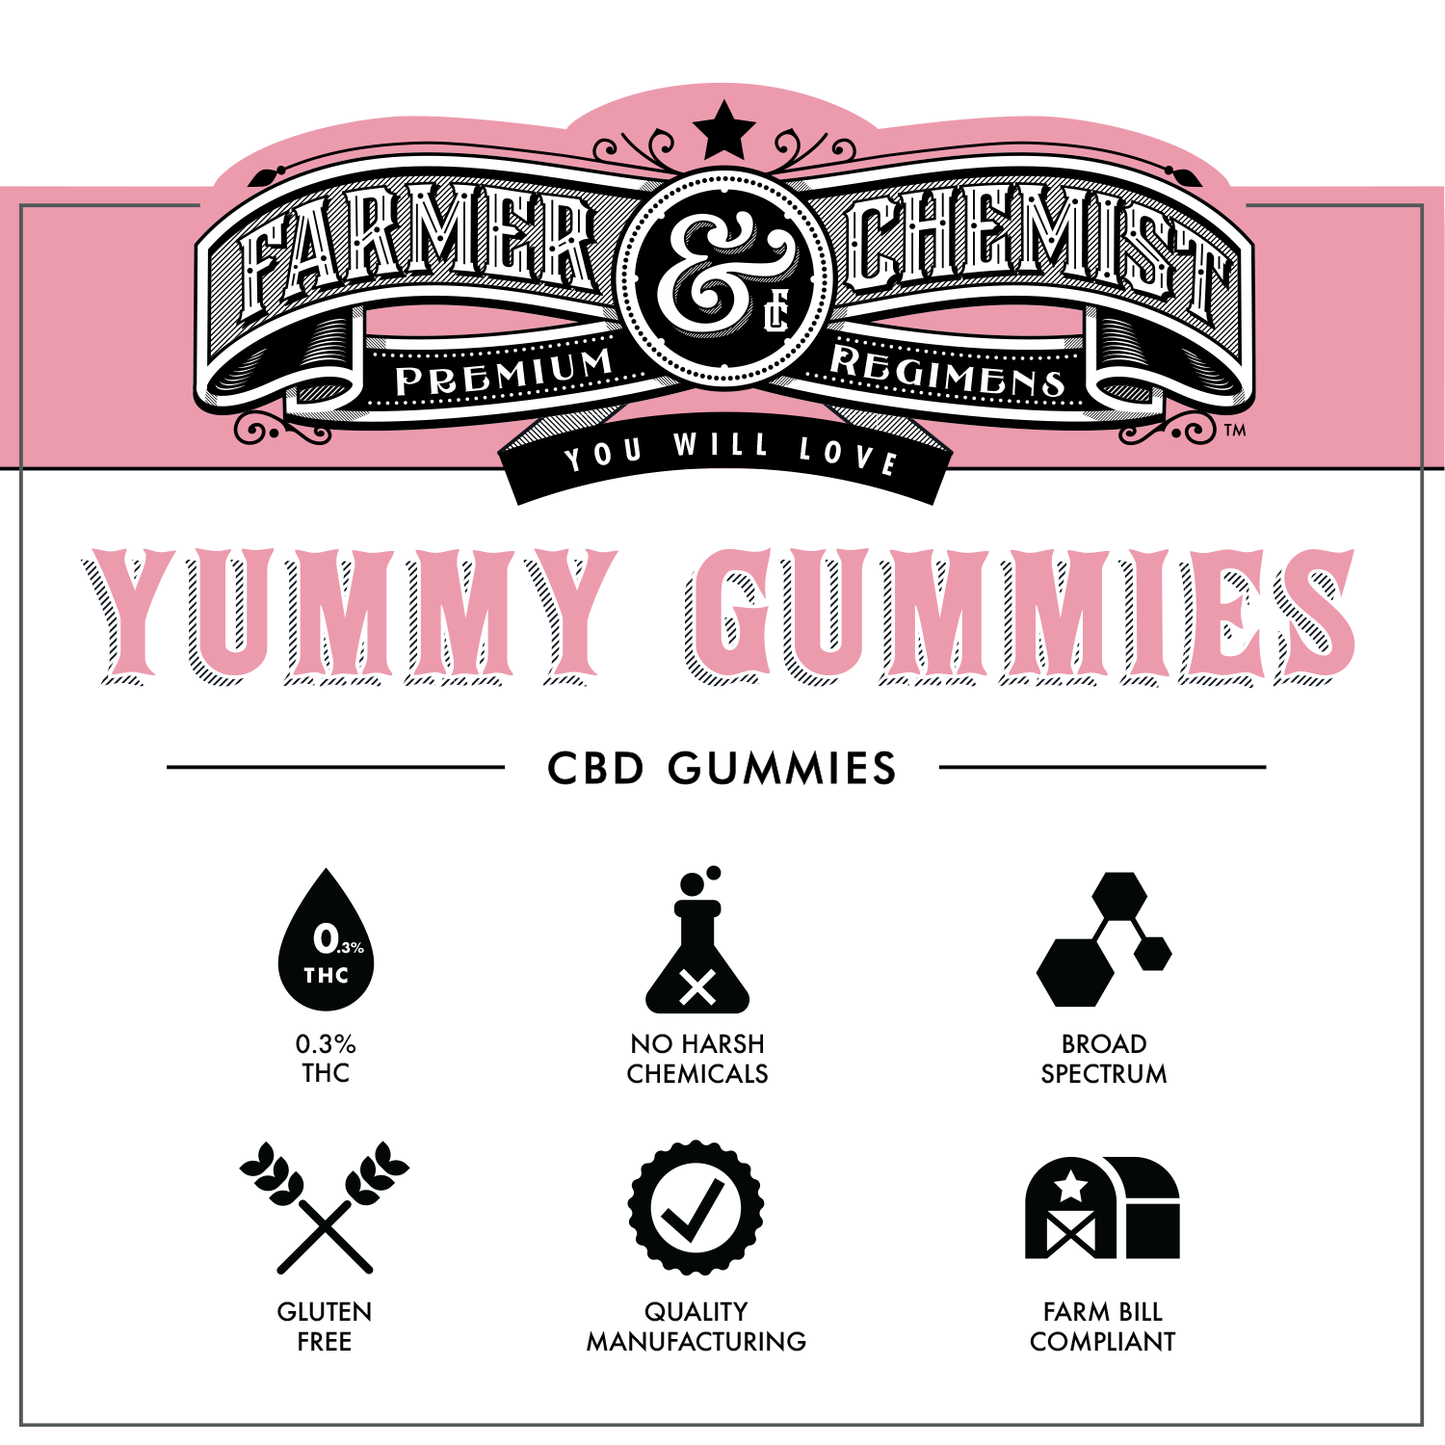 YUMMY GUMMIES - 24ct 28mg CBD/5mg CBG Gummies (Caja de 4)